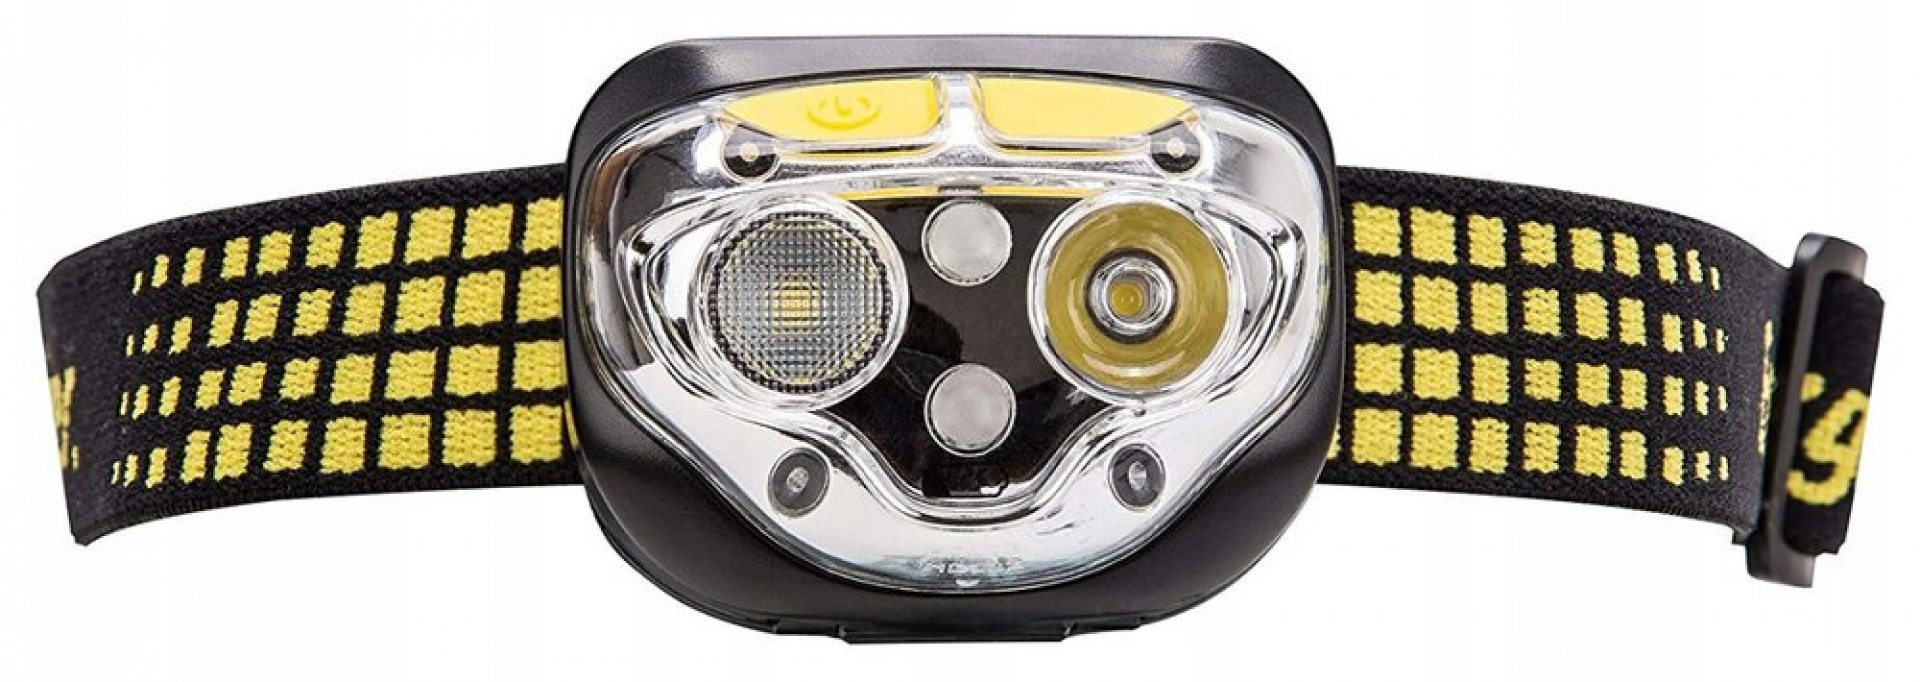 ENERGIZER Vision Ultra Headlamp 450 Lumens